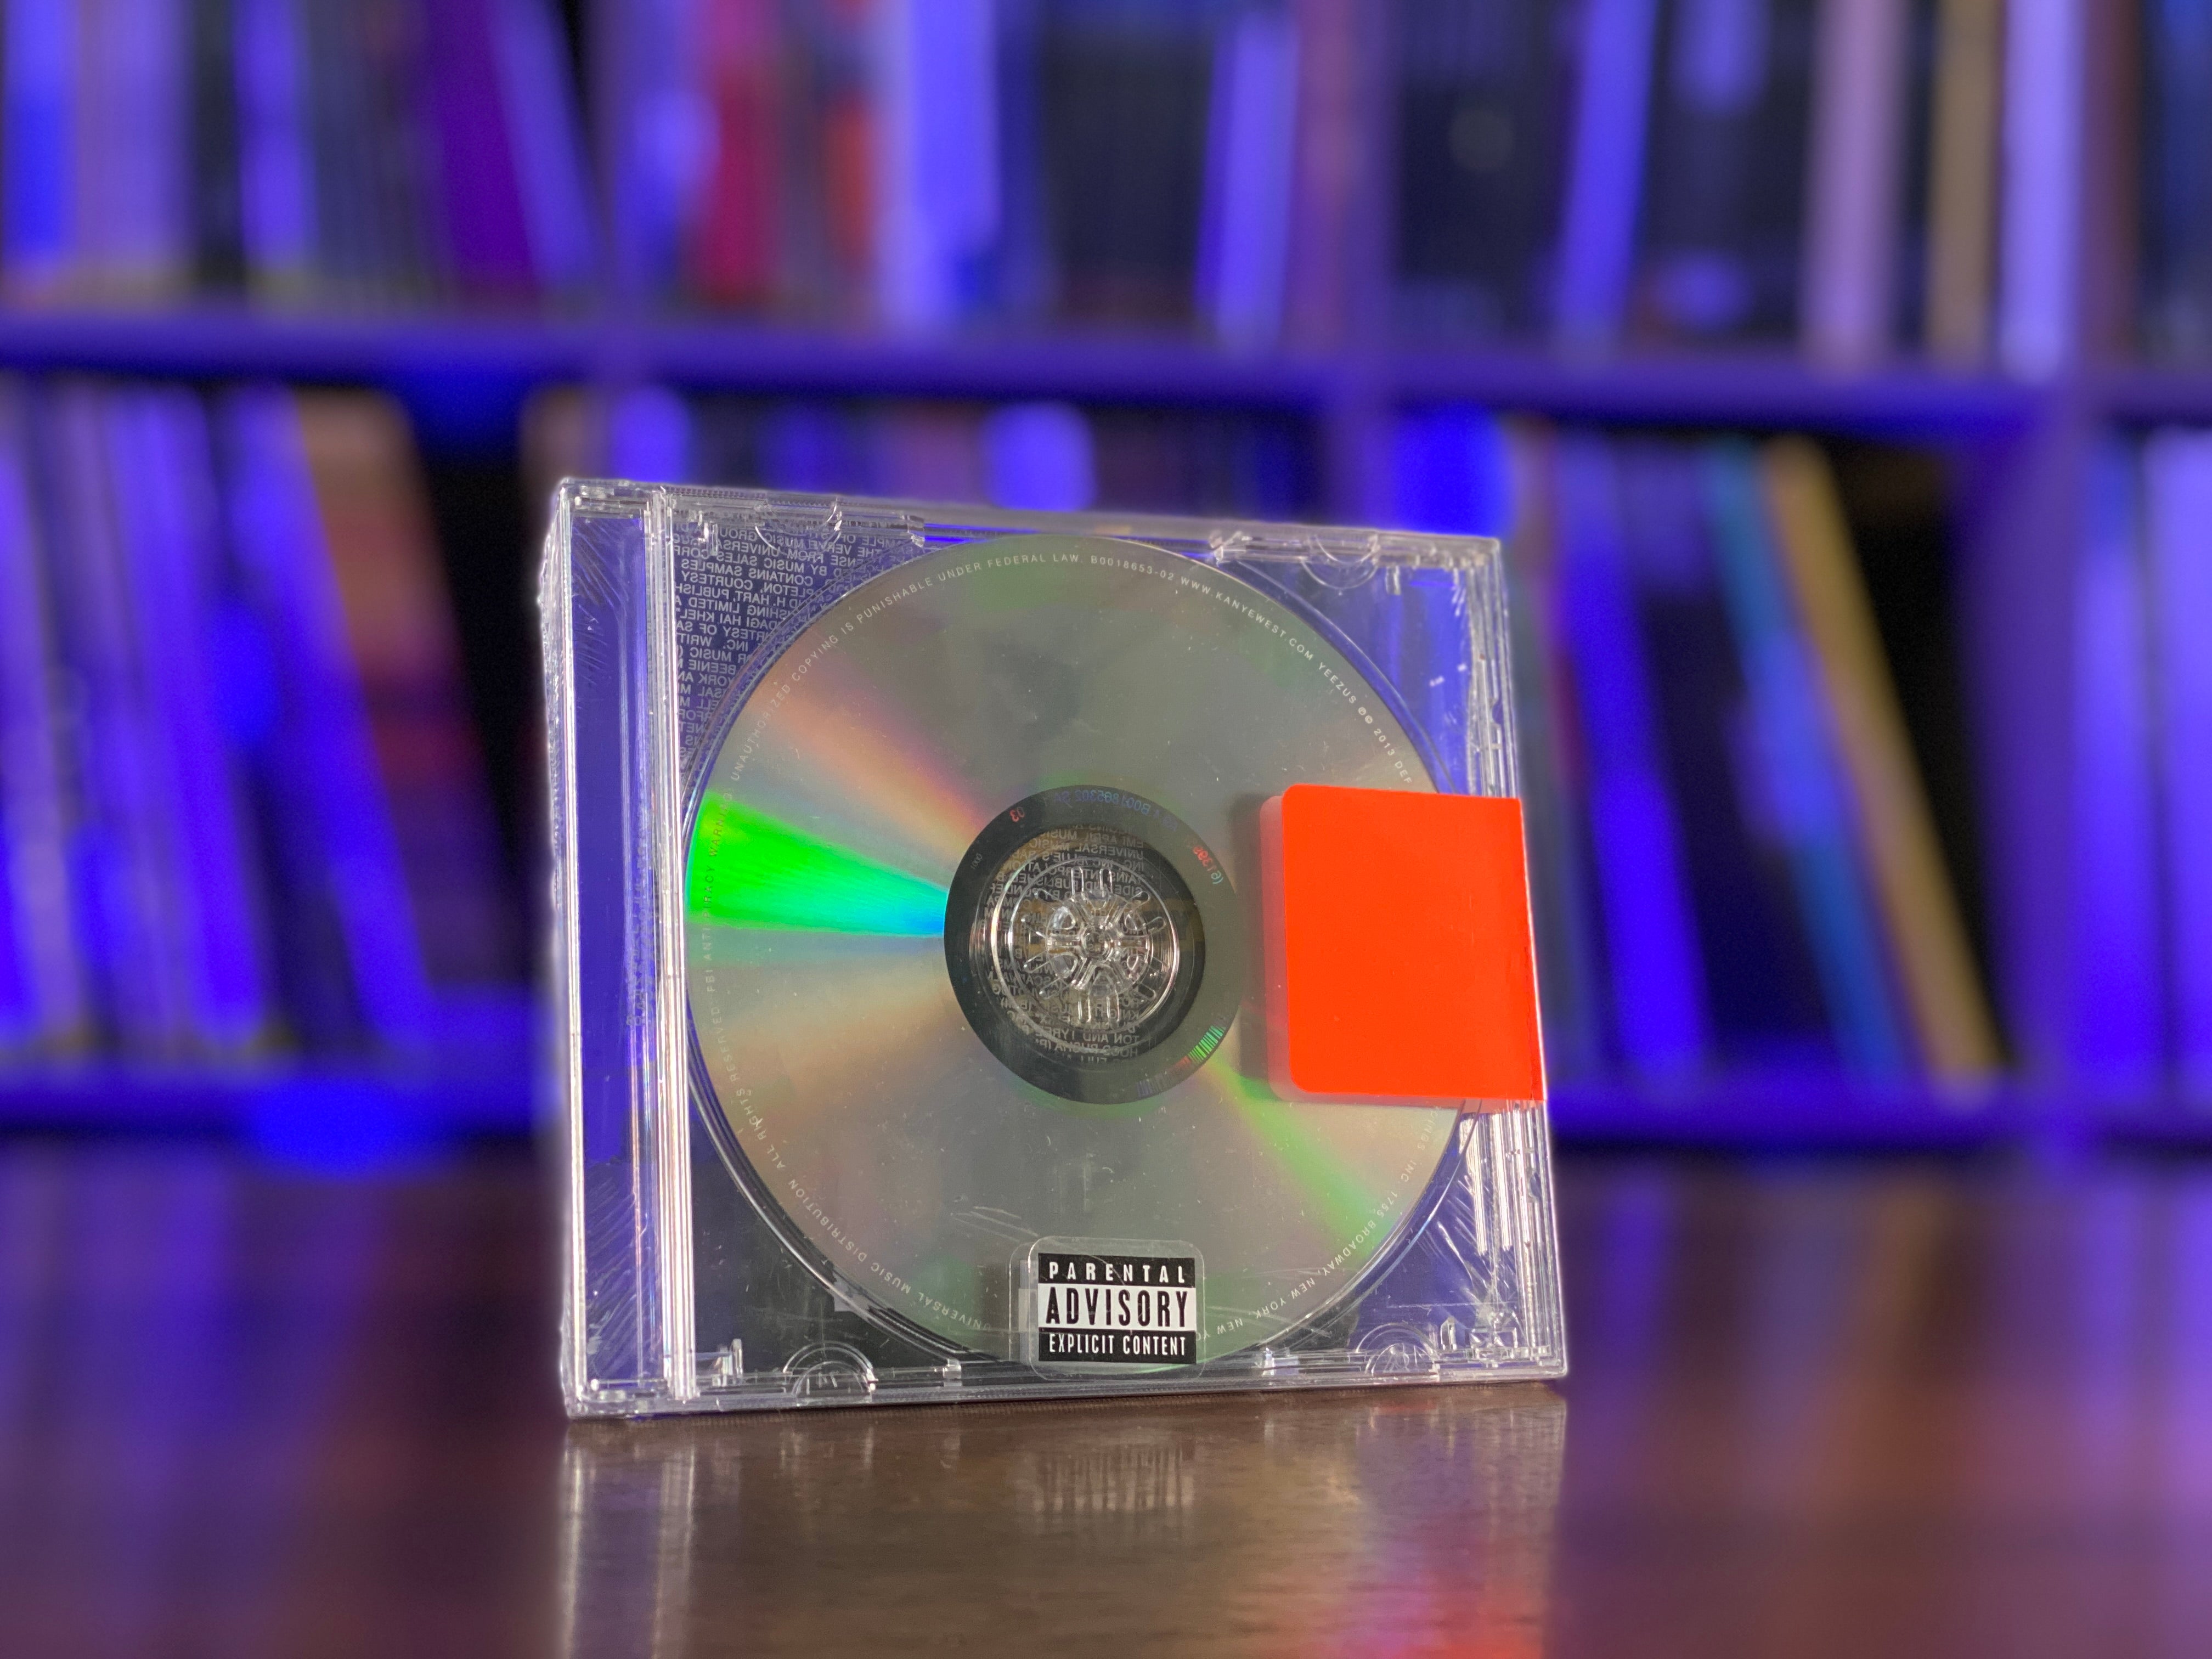 Kanye West – Yeezus